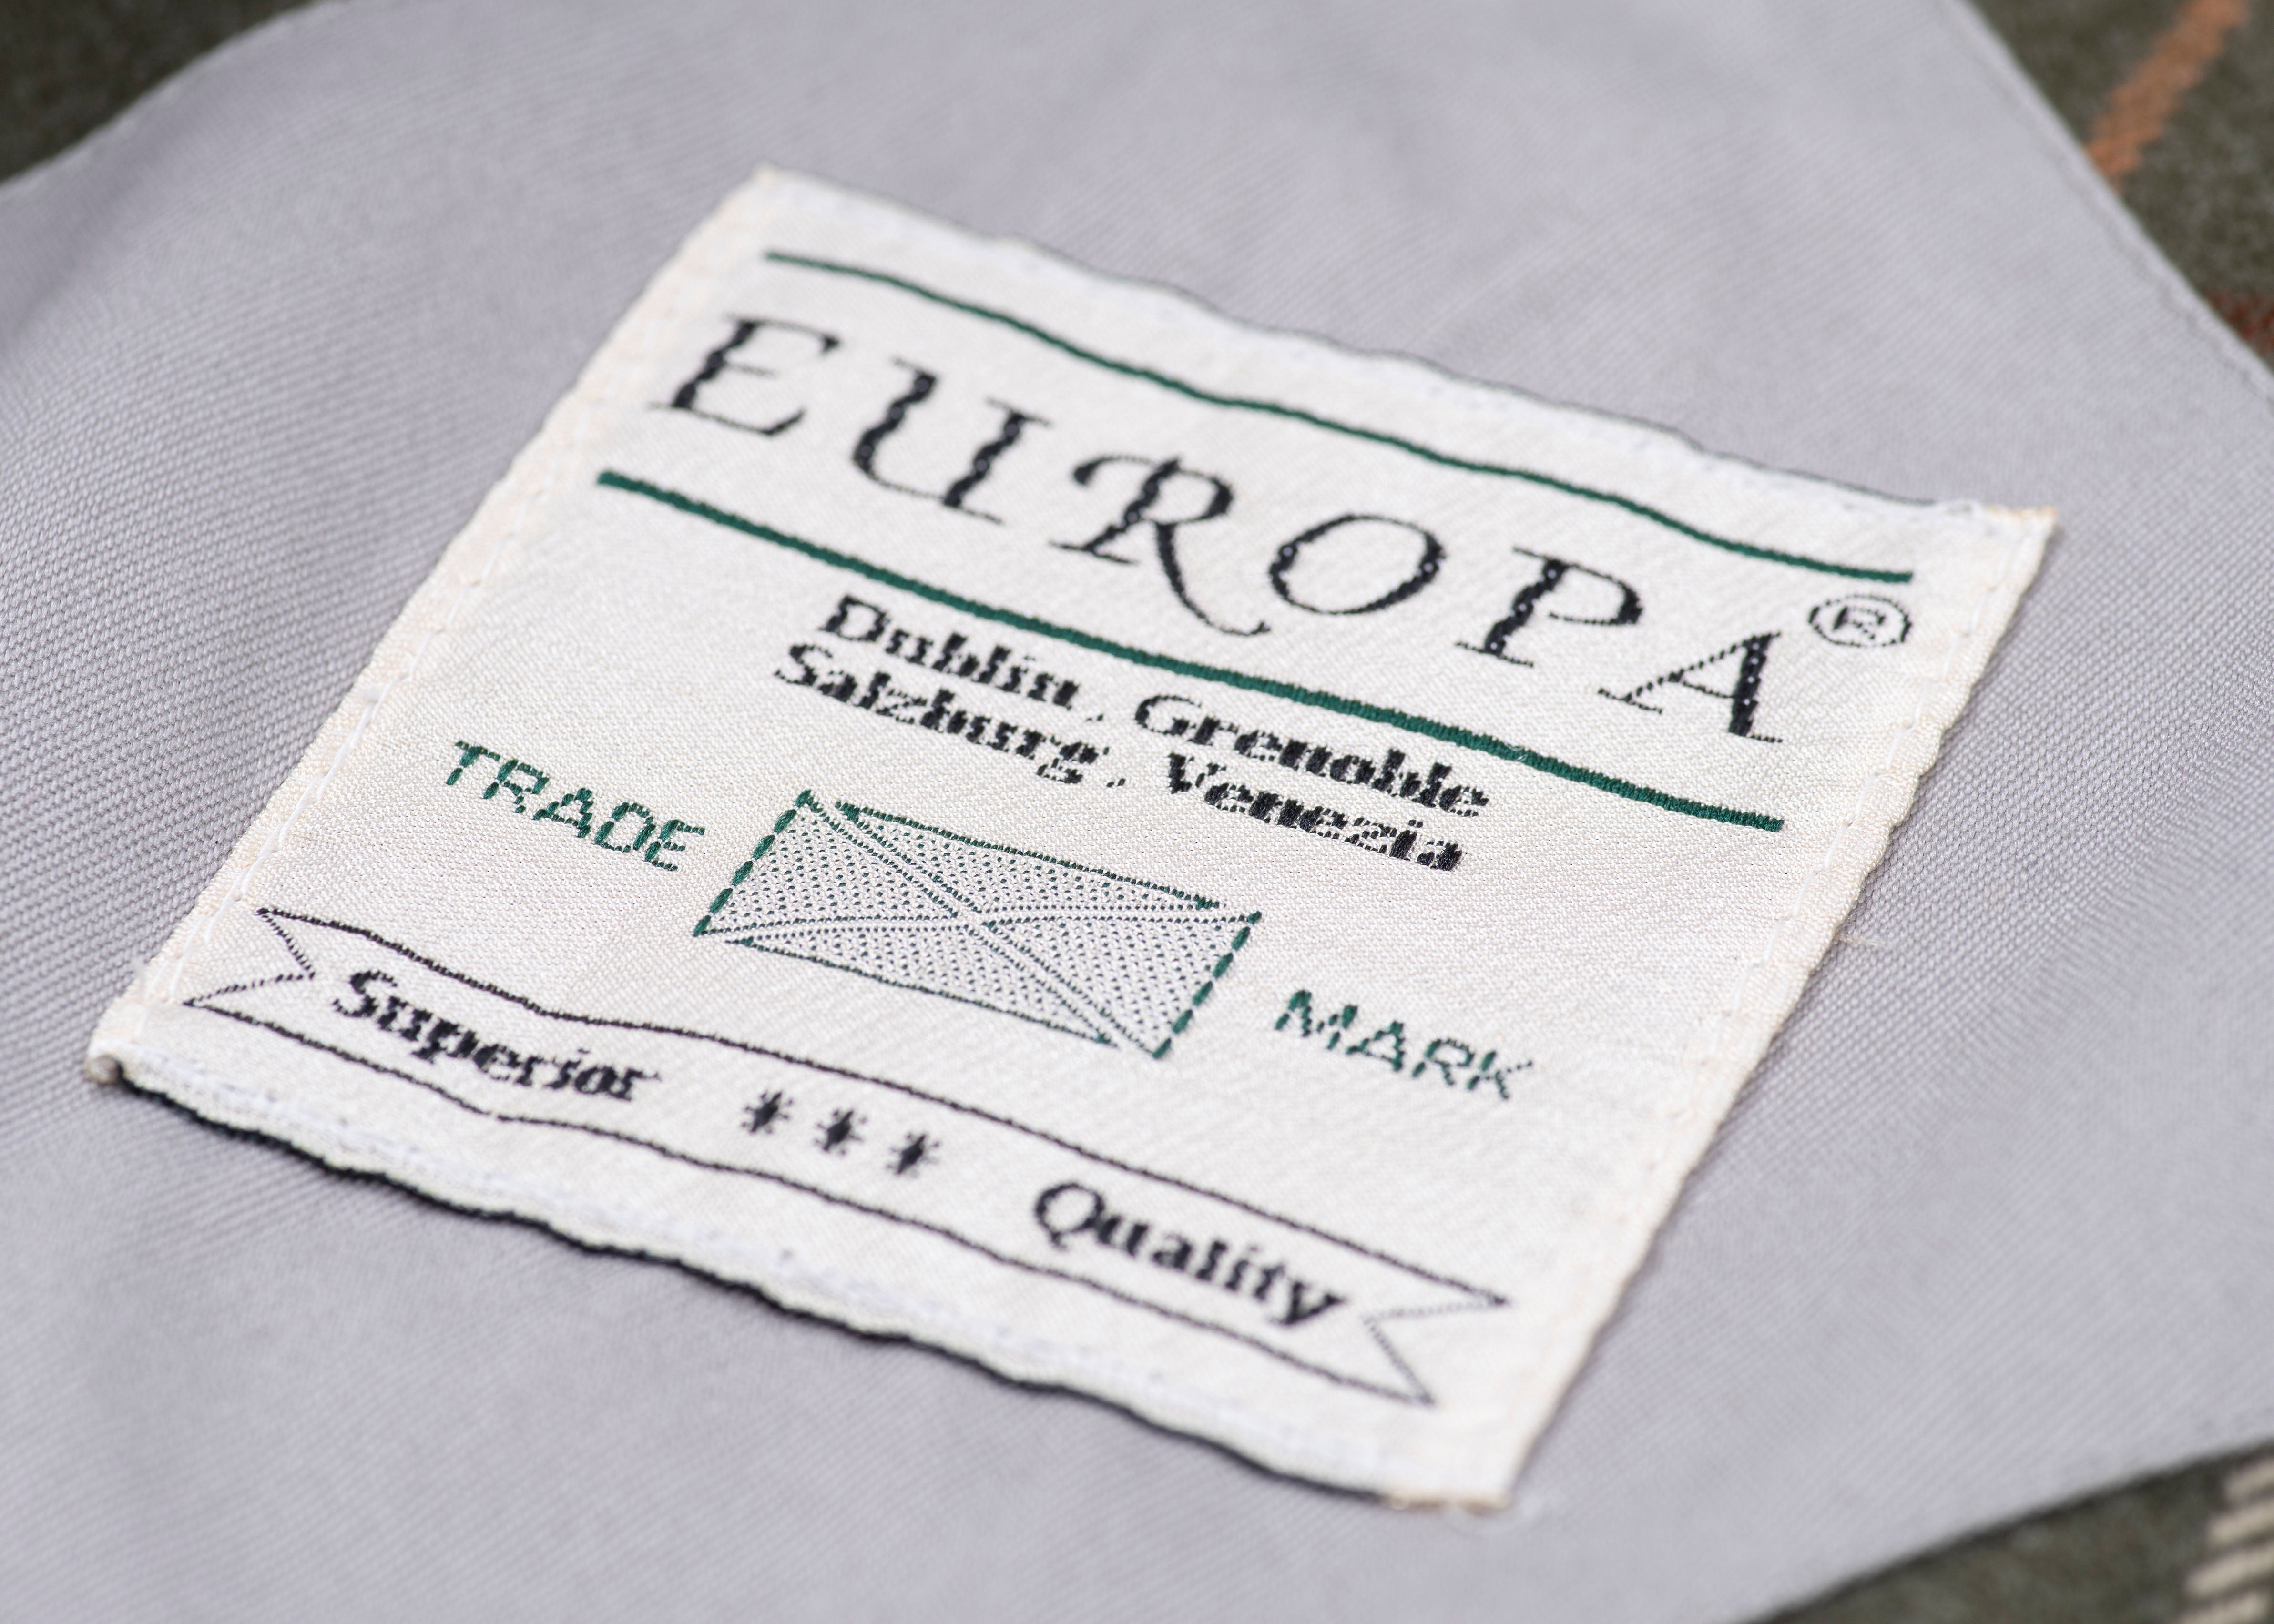 Men's Vintage Gray Gabardine Mac Coat, Size EU 46, USA 36R